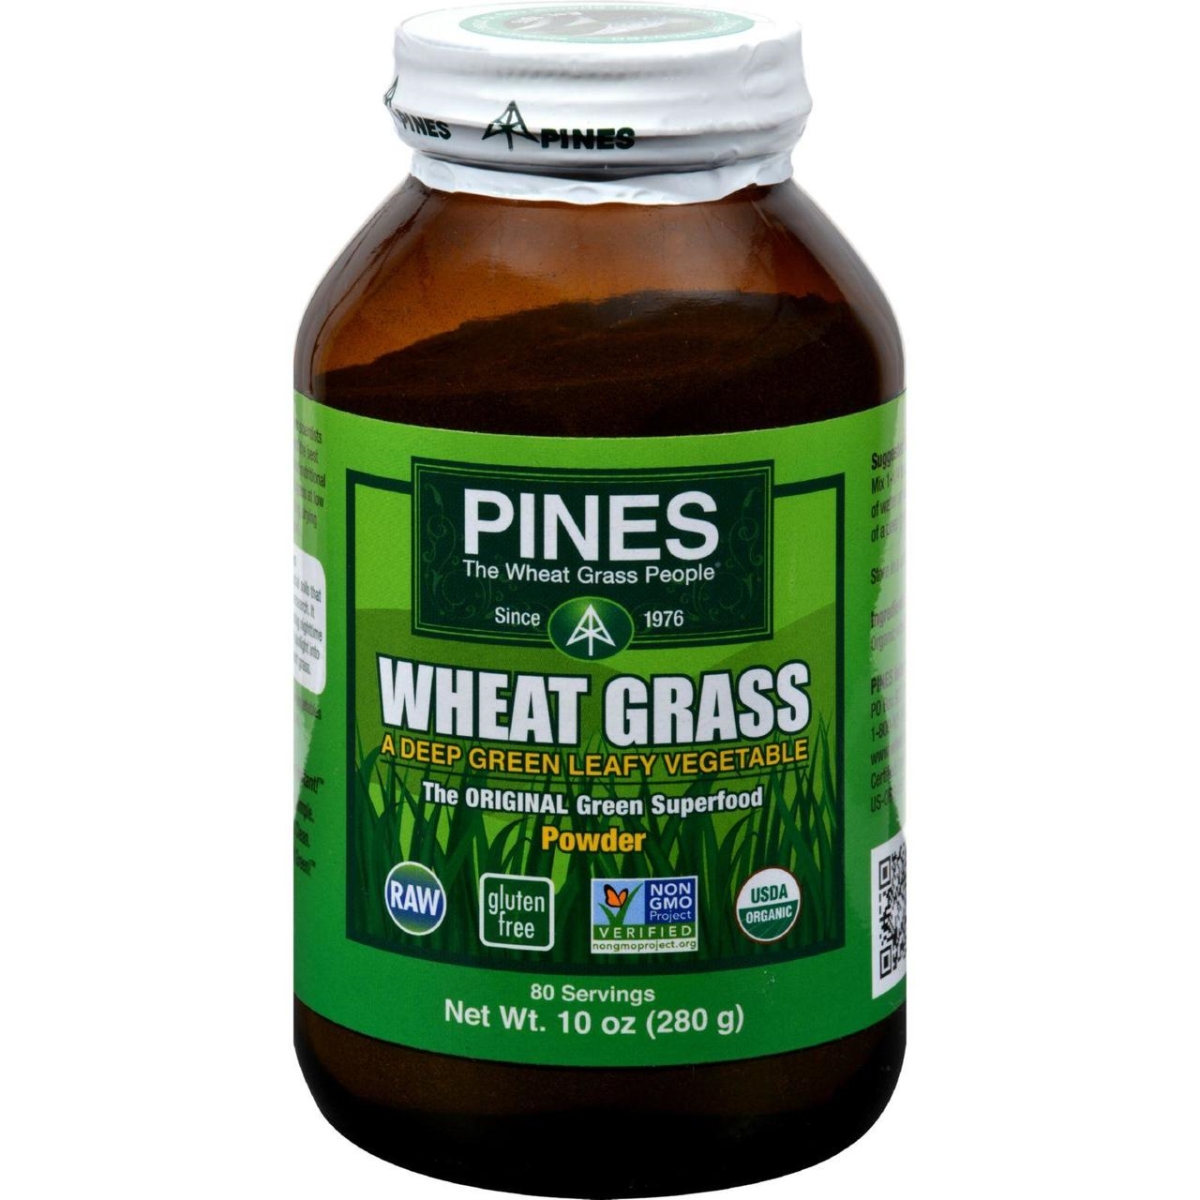 Hg0829960 10 Oz Wheat Grass Powder